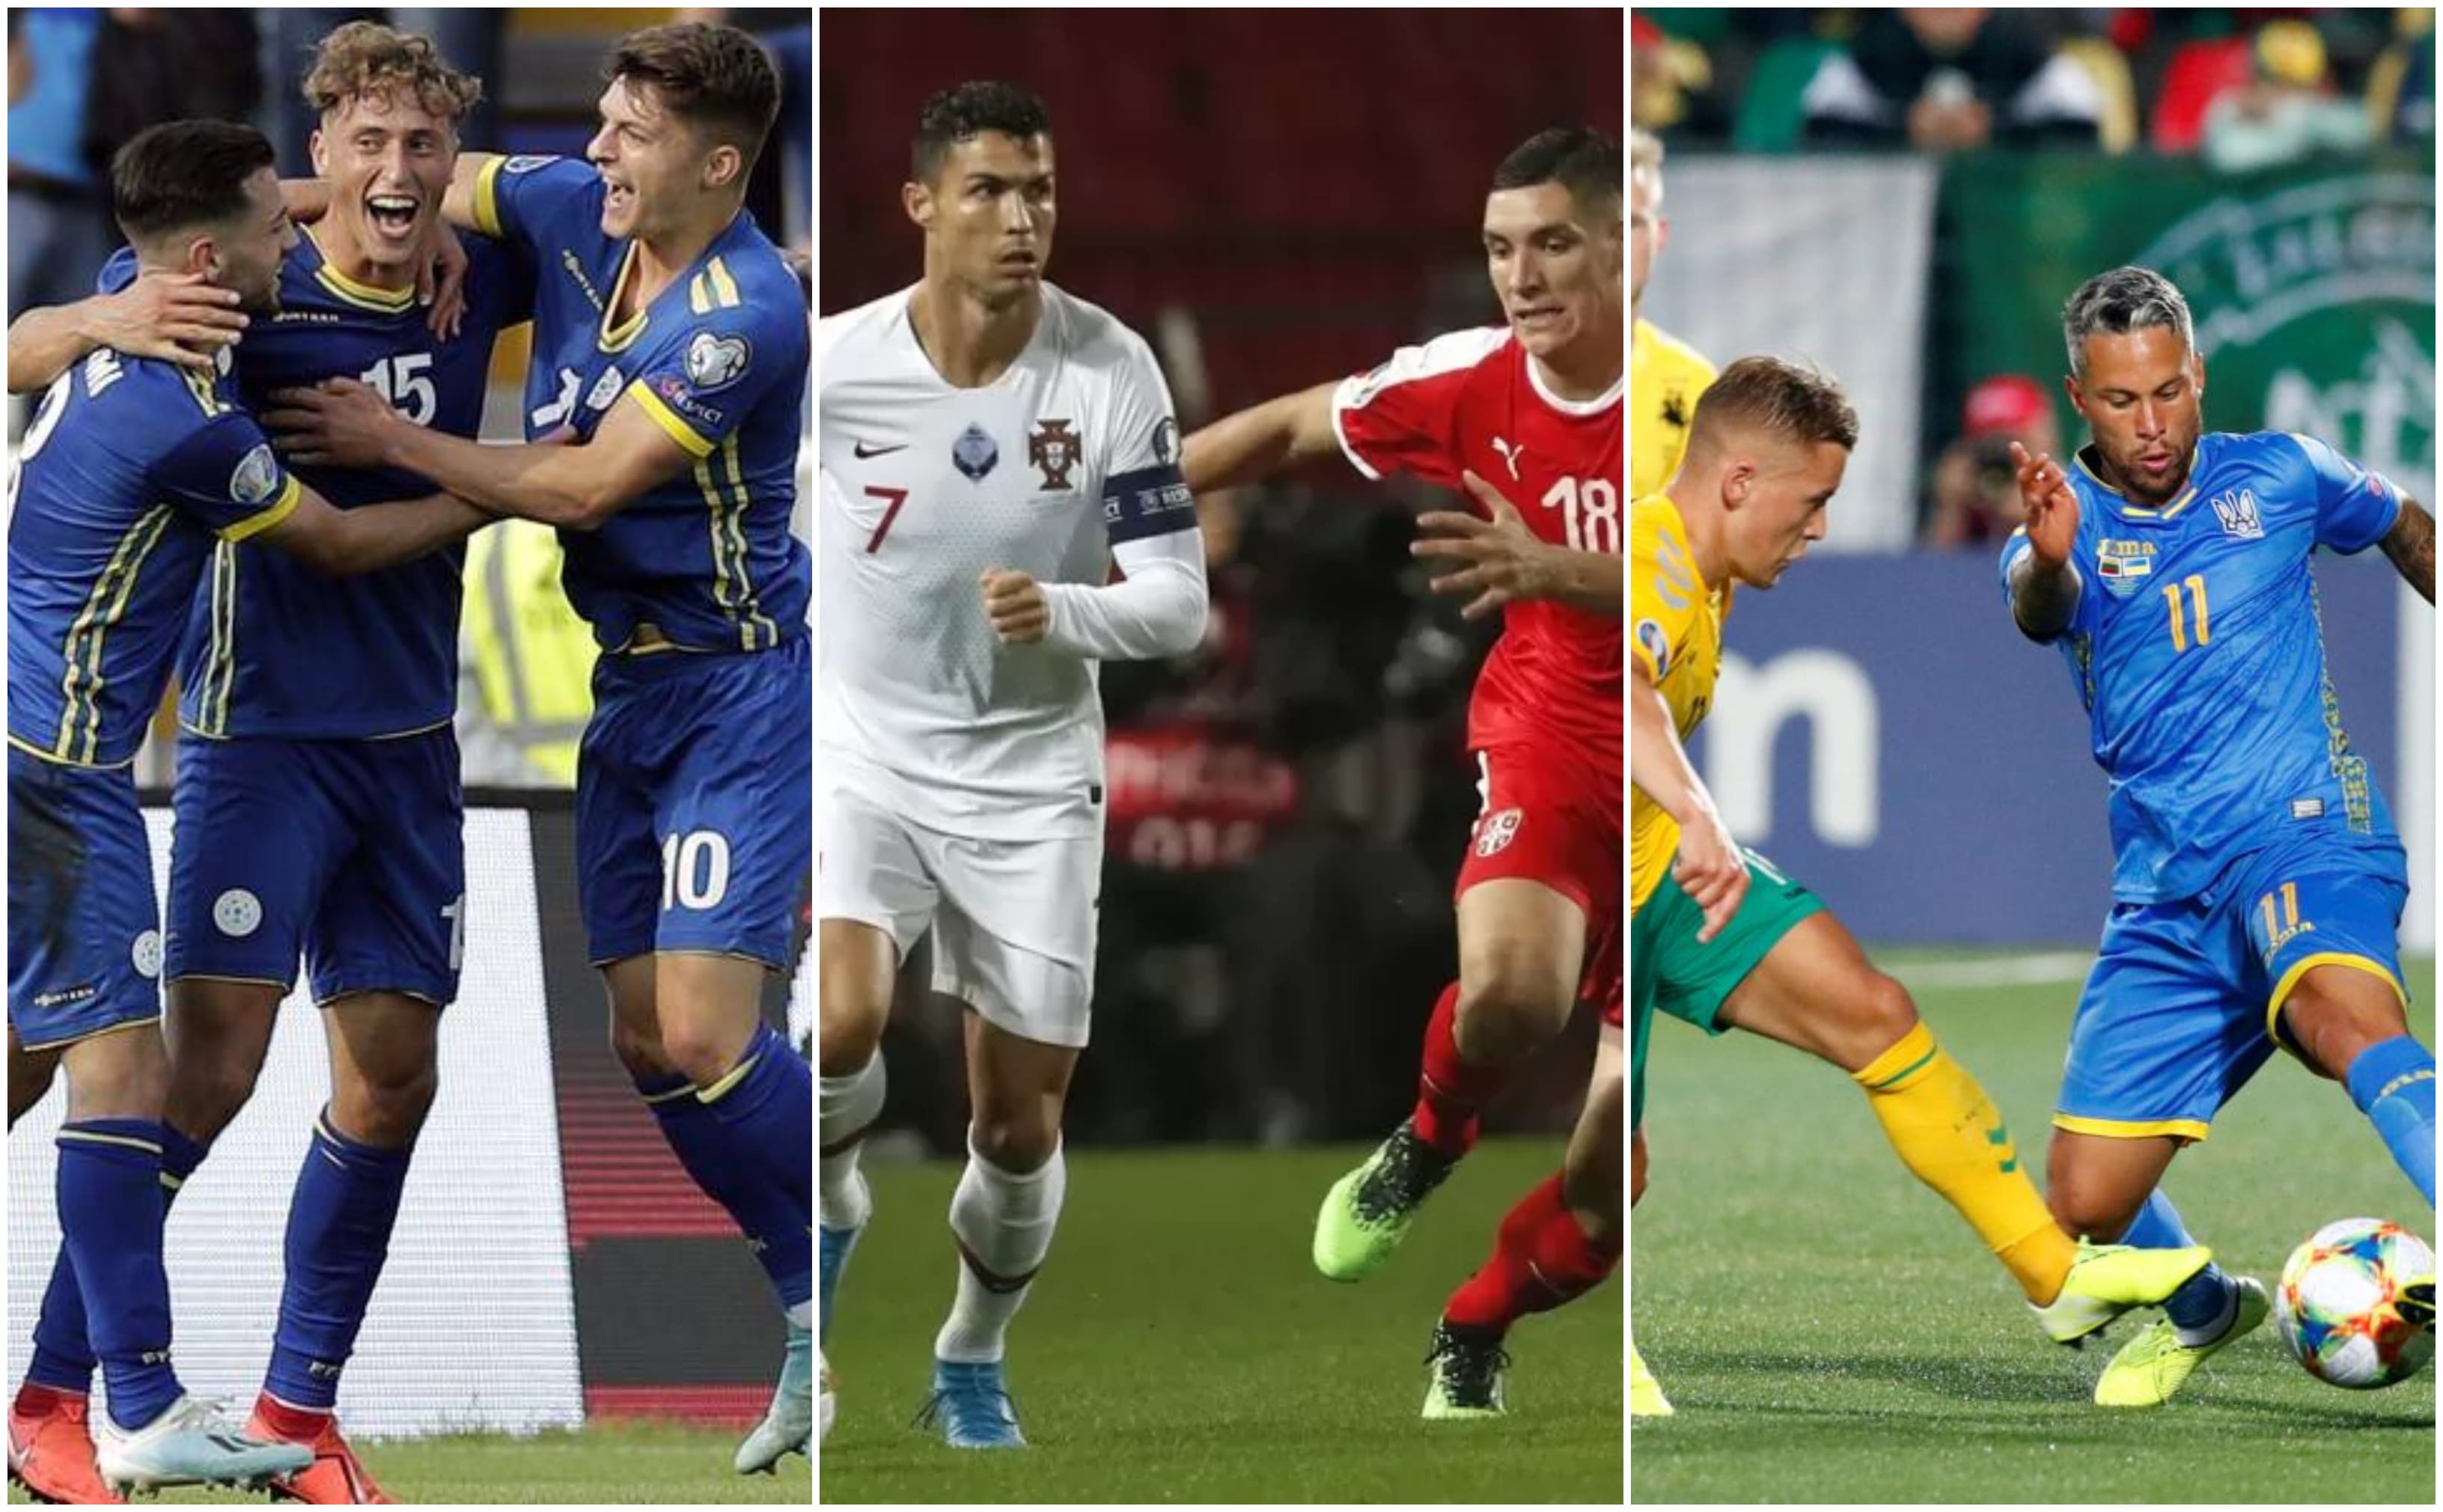 EURO 2020 Qualification Match Day 07.09.2019 Round Up